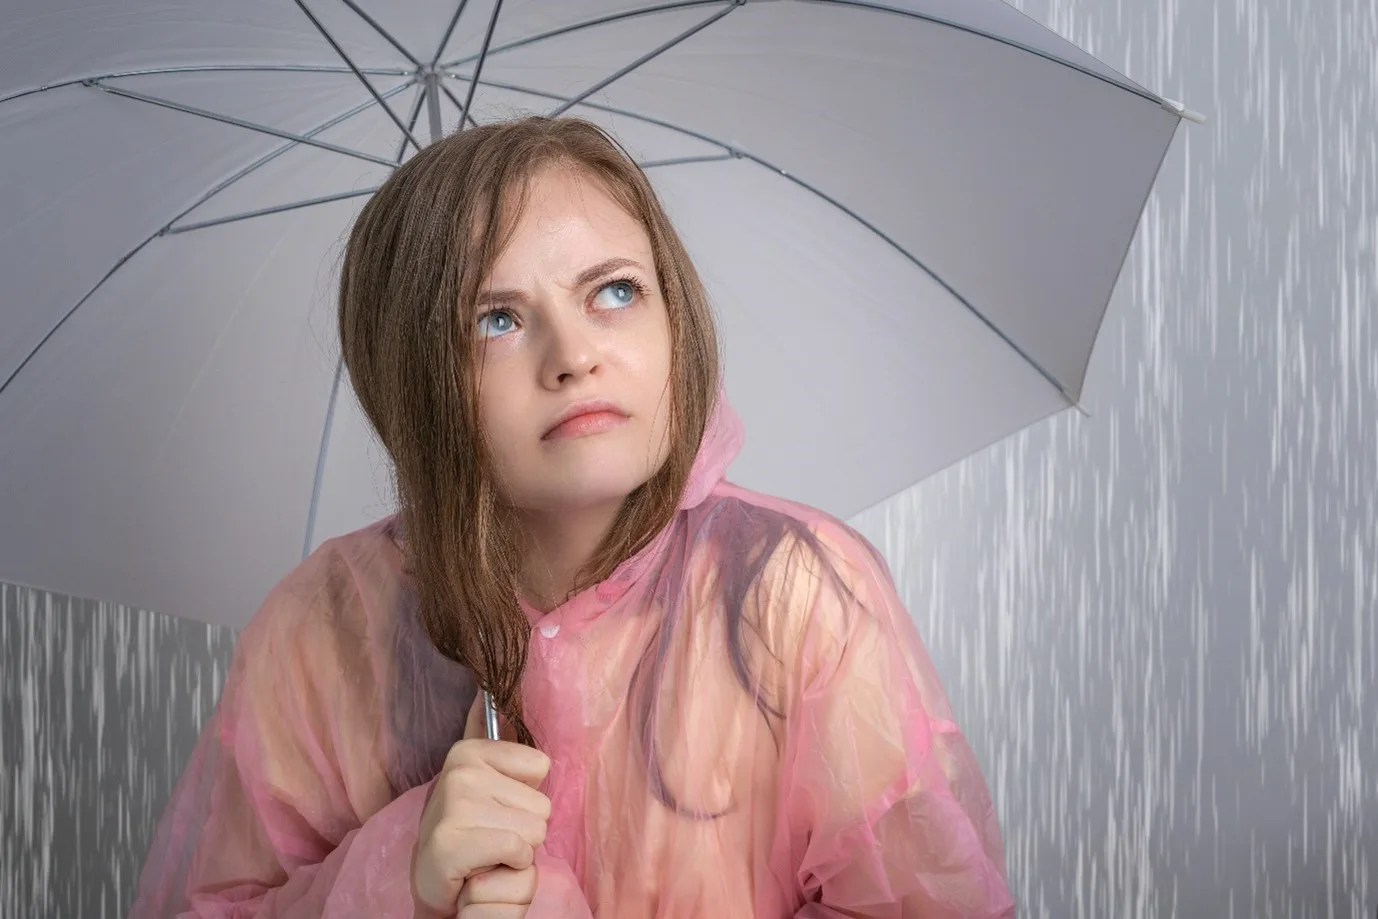 Woman standing in rain